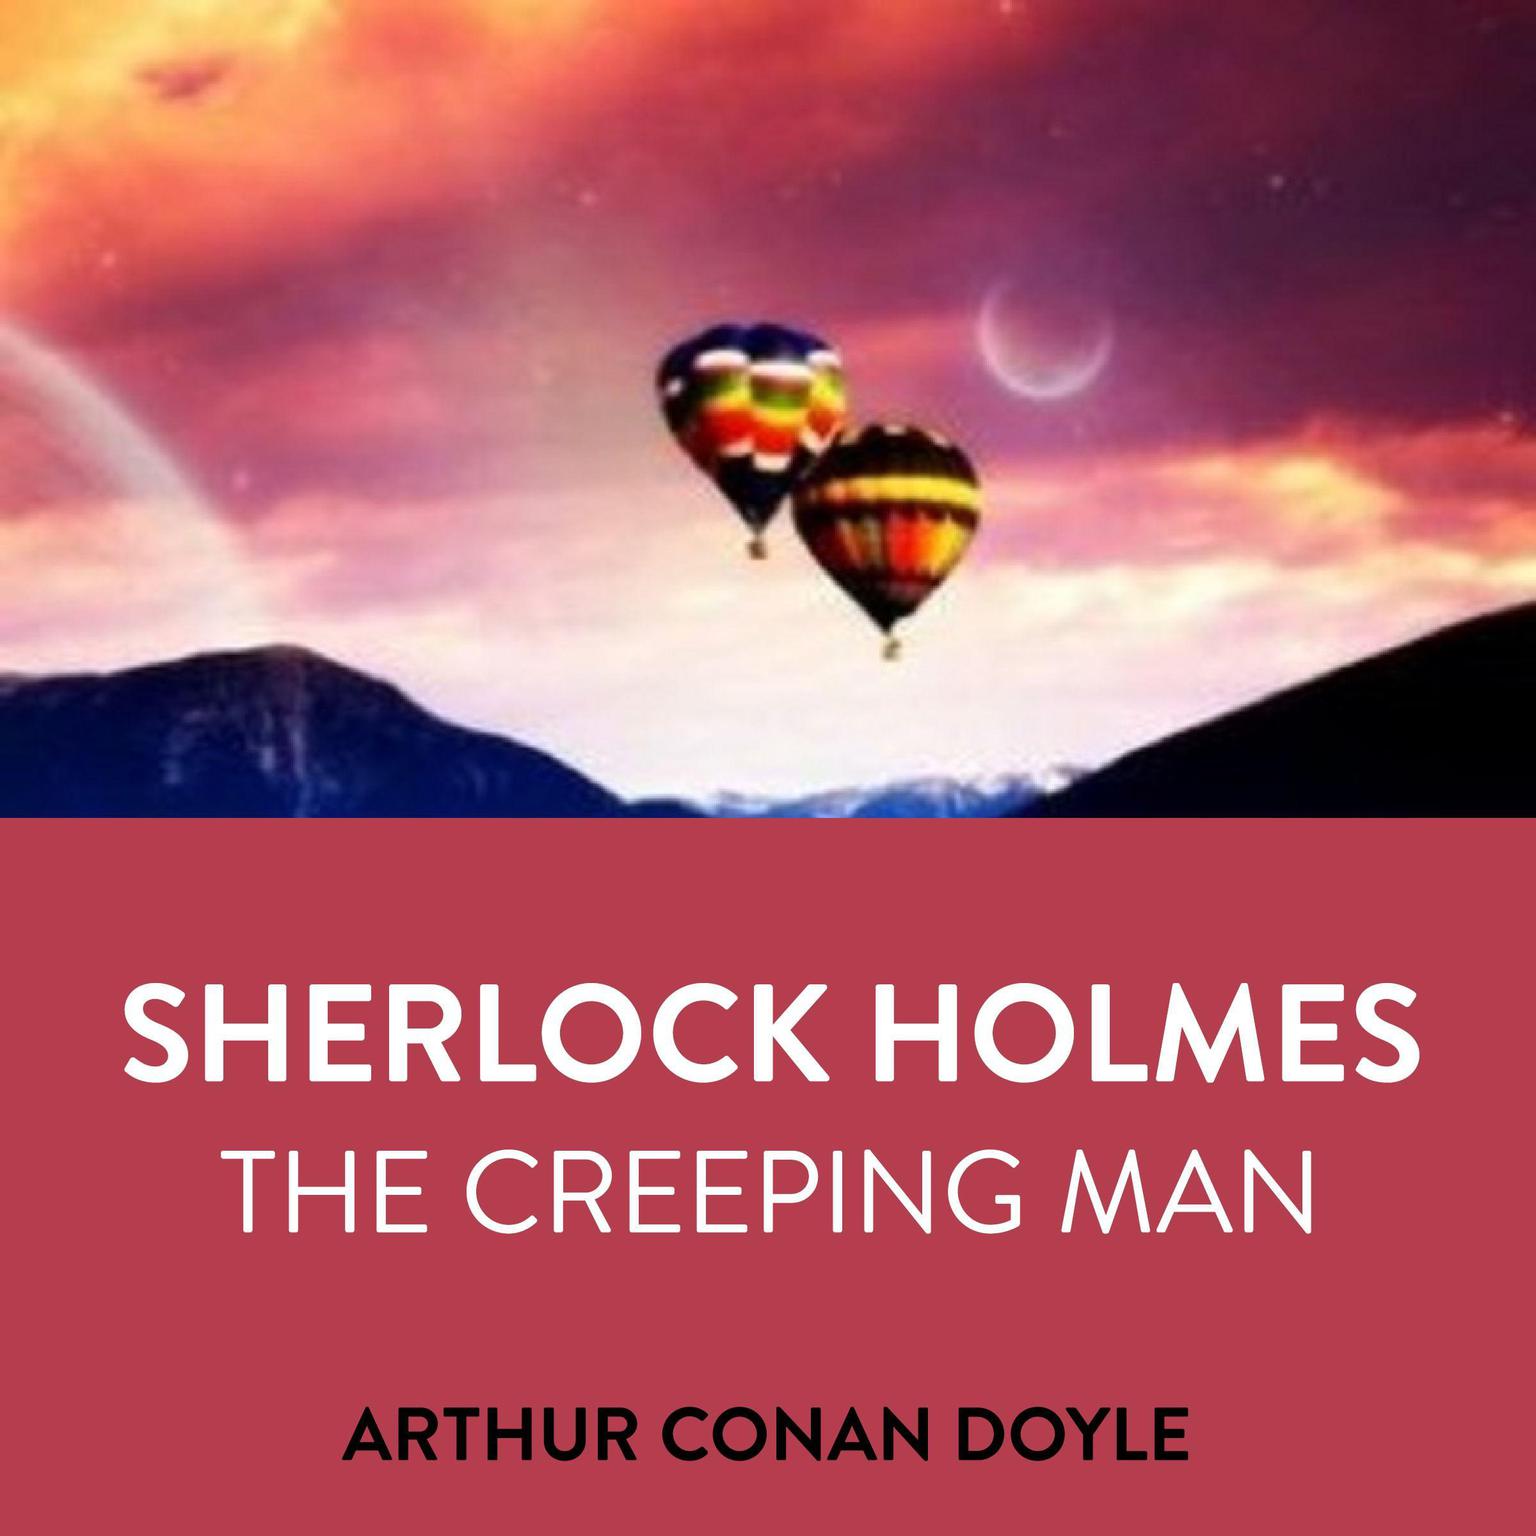 Sherlock Holmes The Creeping Man Audiobook, by Arthur Conan Doyle